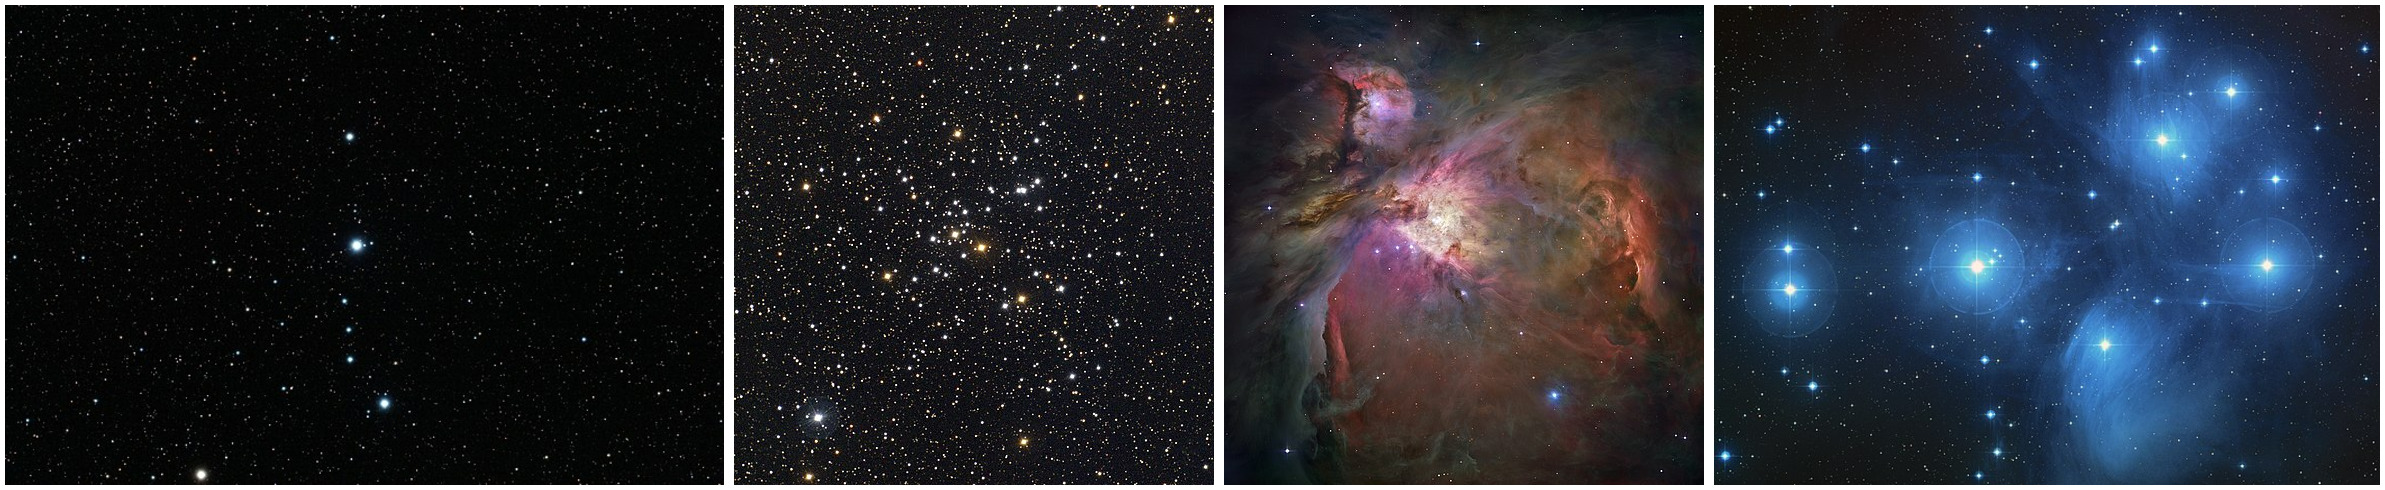 Da sinistra a destra: Lambda Orionis (fonte: Wikipedia/Yu-Hang Kuo), M41 (fonte: Wikipedia/NOIRLab / NSF / AURA), nebulosa di Orione (fonte: Wikipedia), Pleiadi (fonte: Wikipedia)